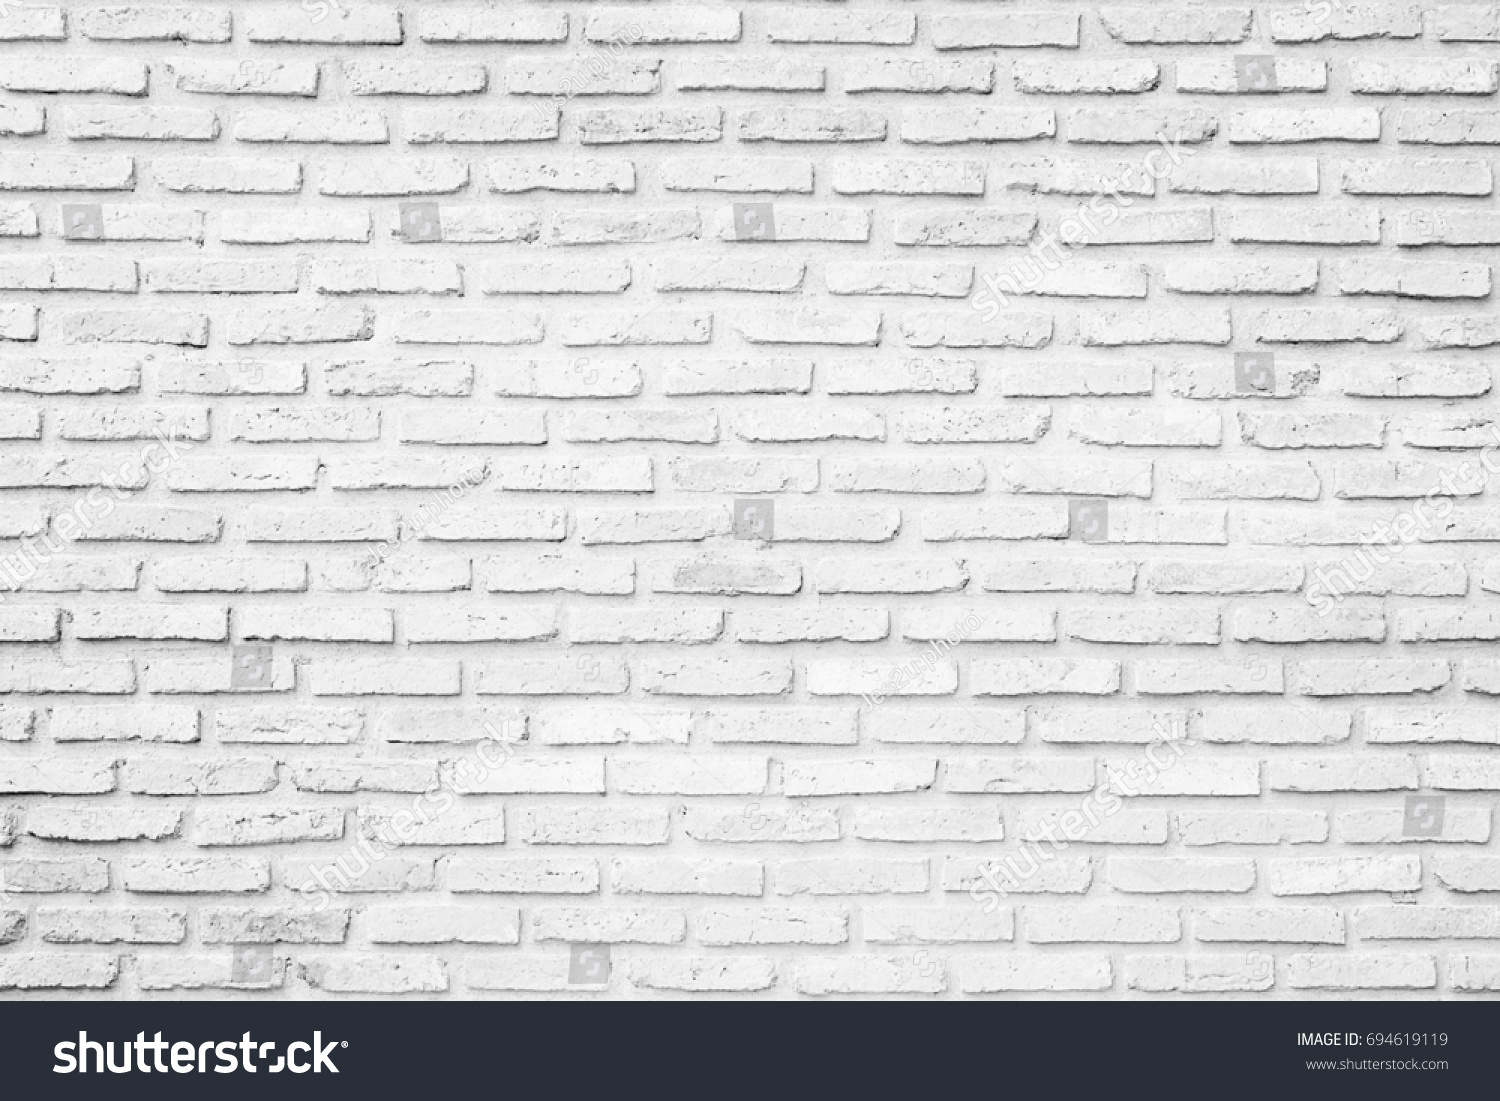 Old White Brick Wall Texture Design Stock Photo 694619119 | Shutterstock